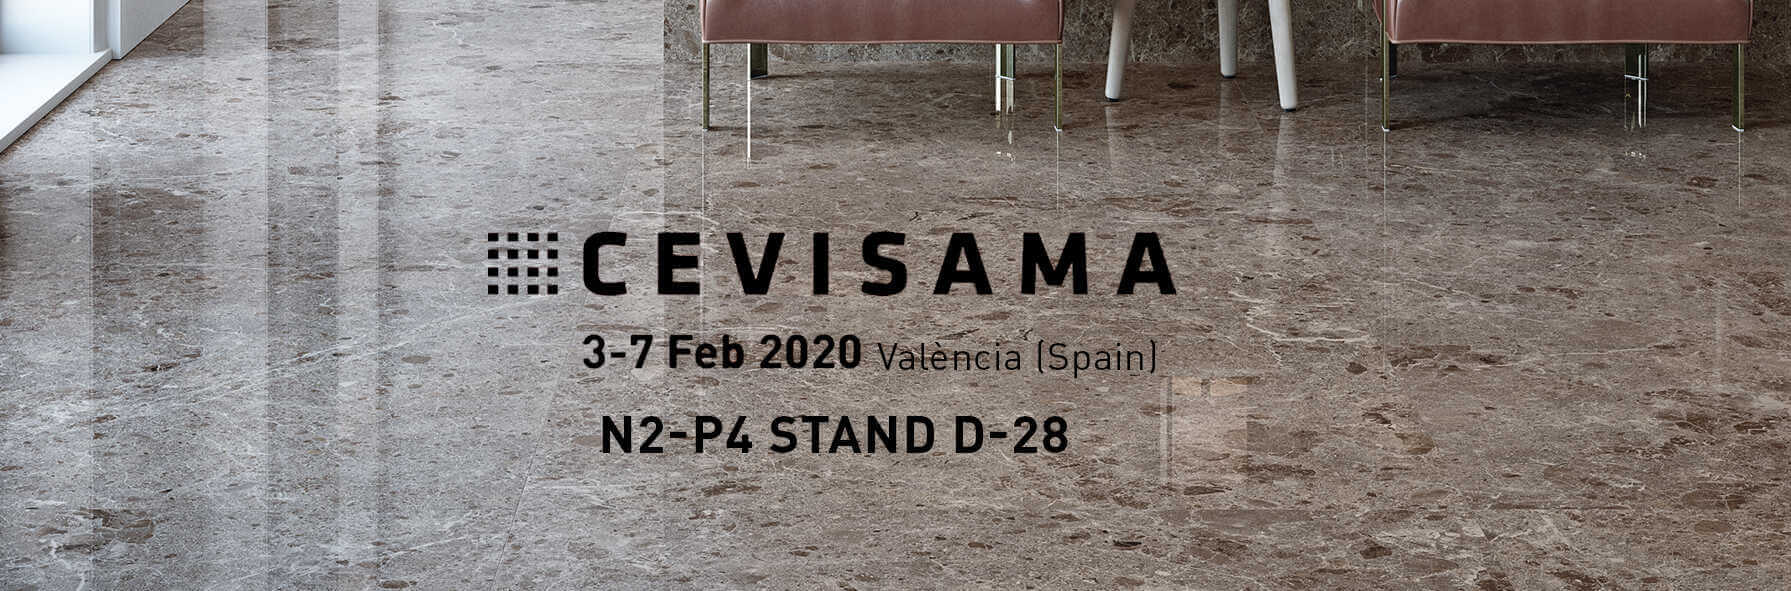 INVITATION CEVISAMA 2020